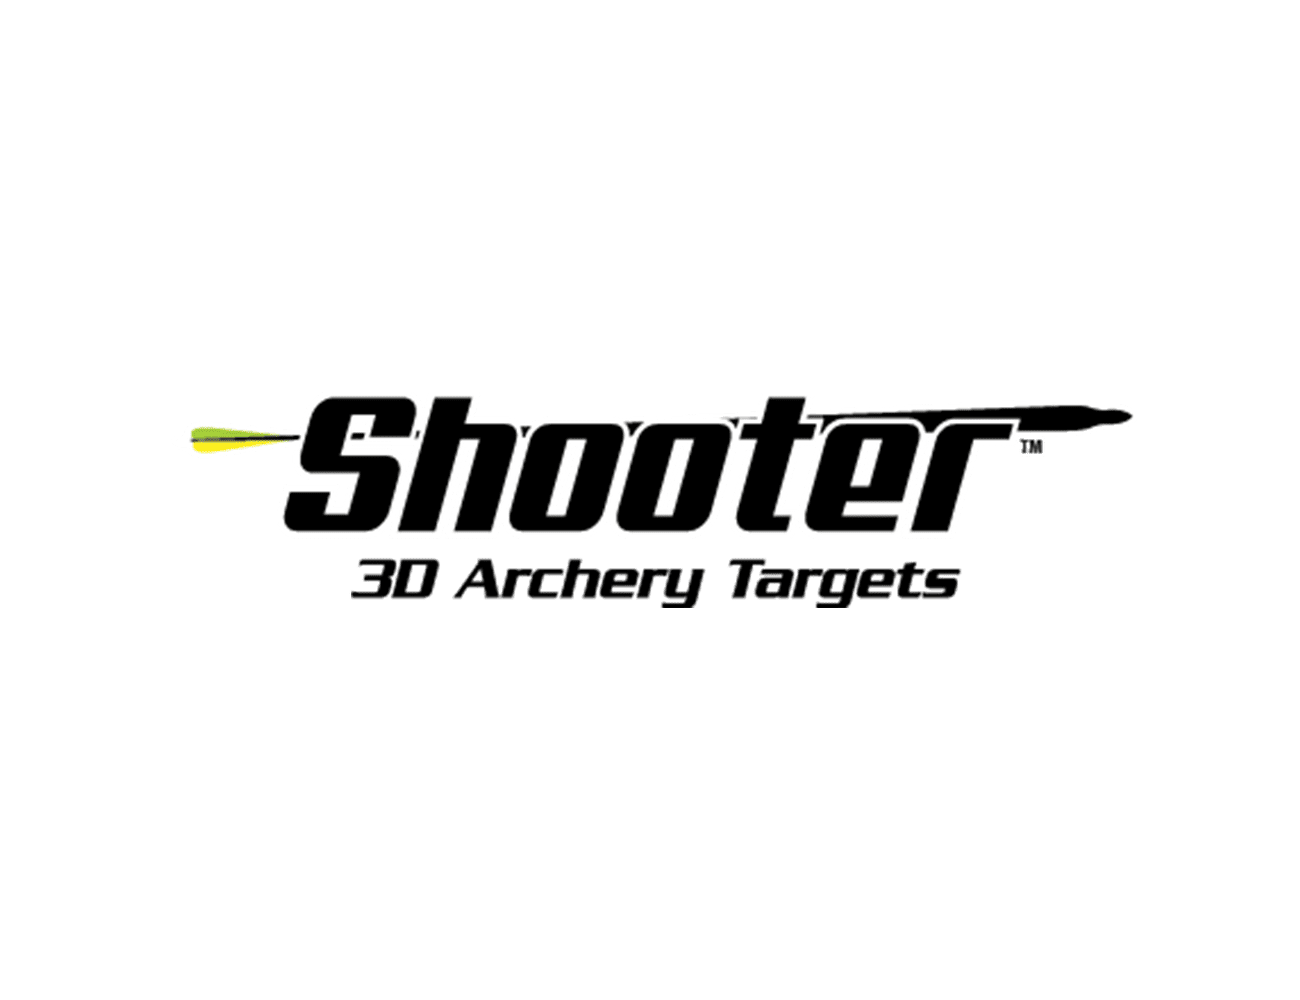 Shooter 3D Archery Targets logo